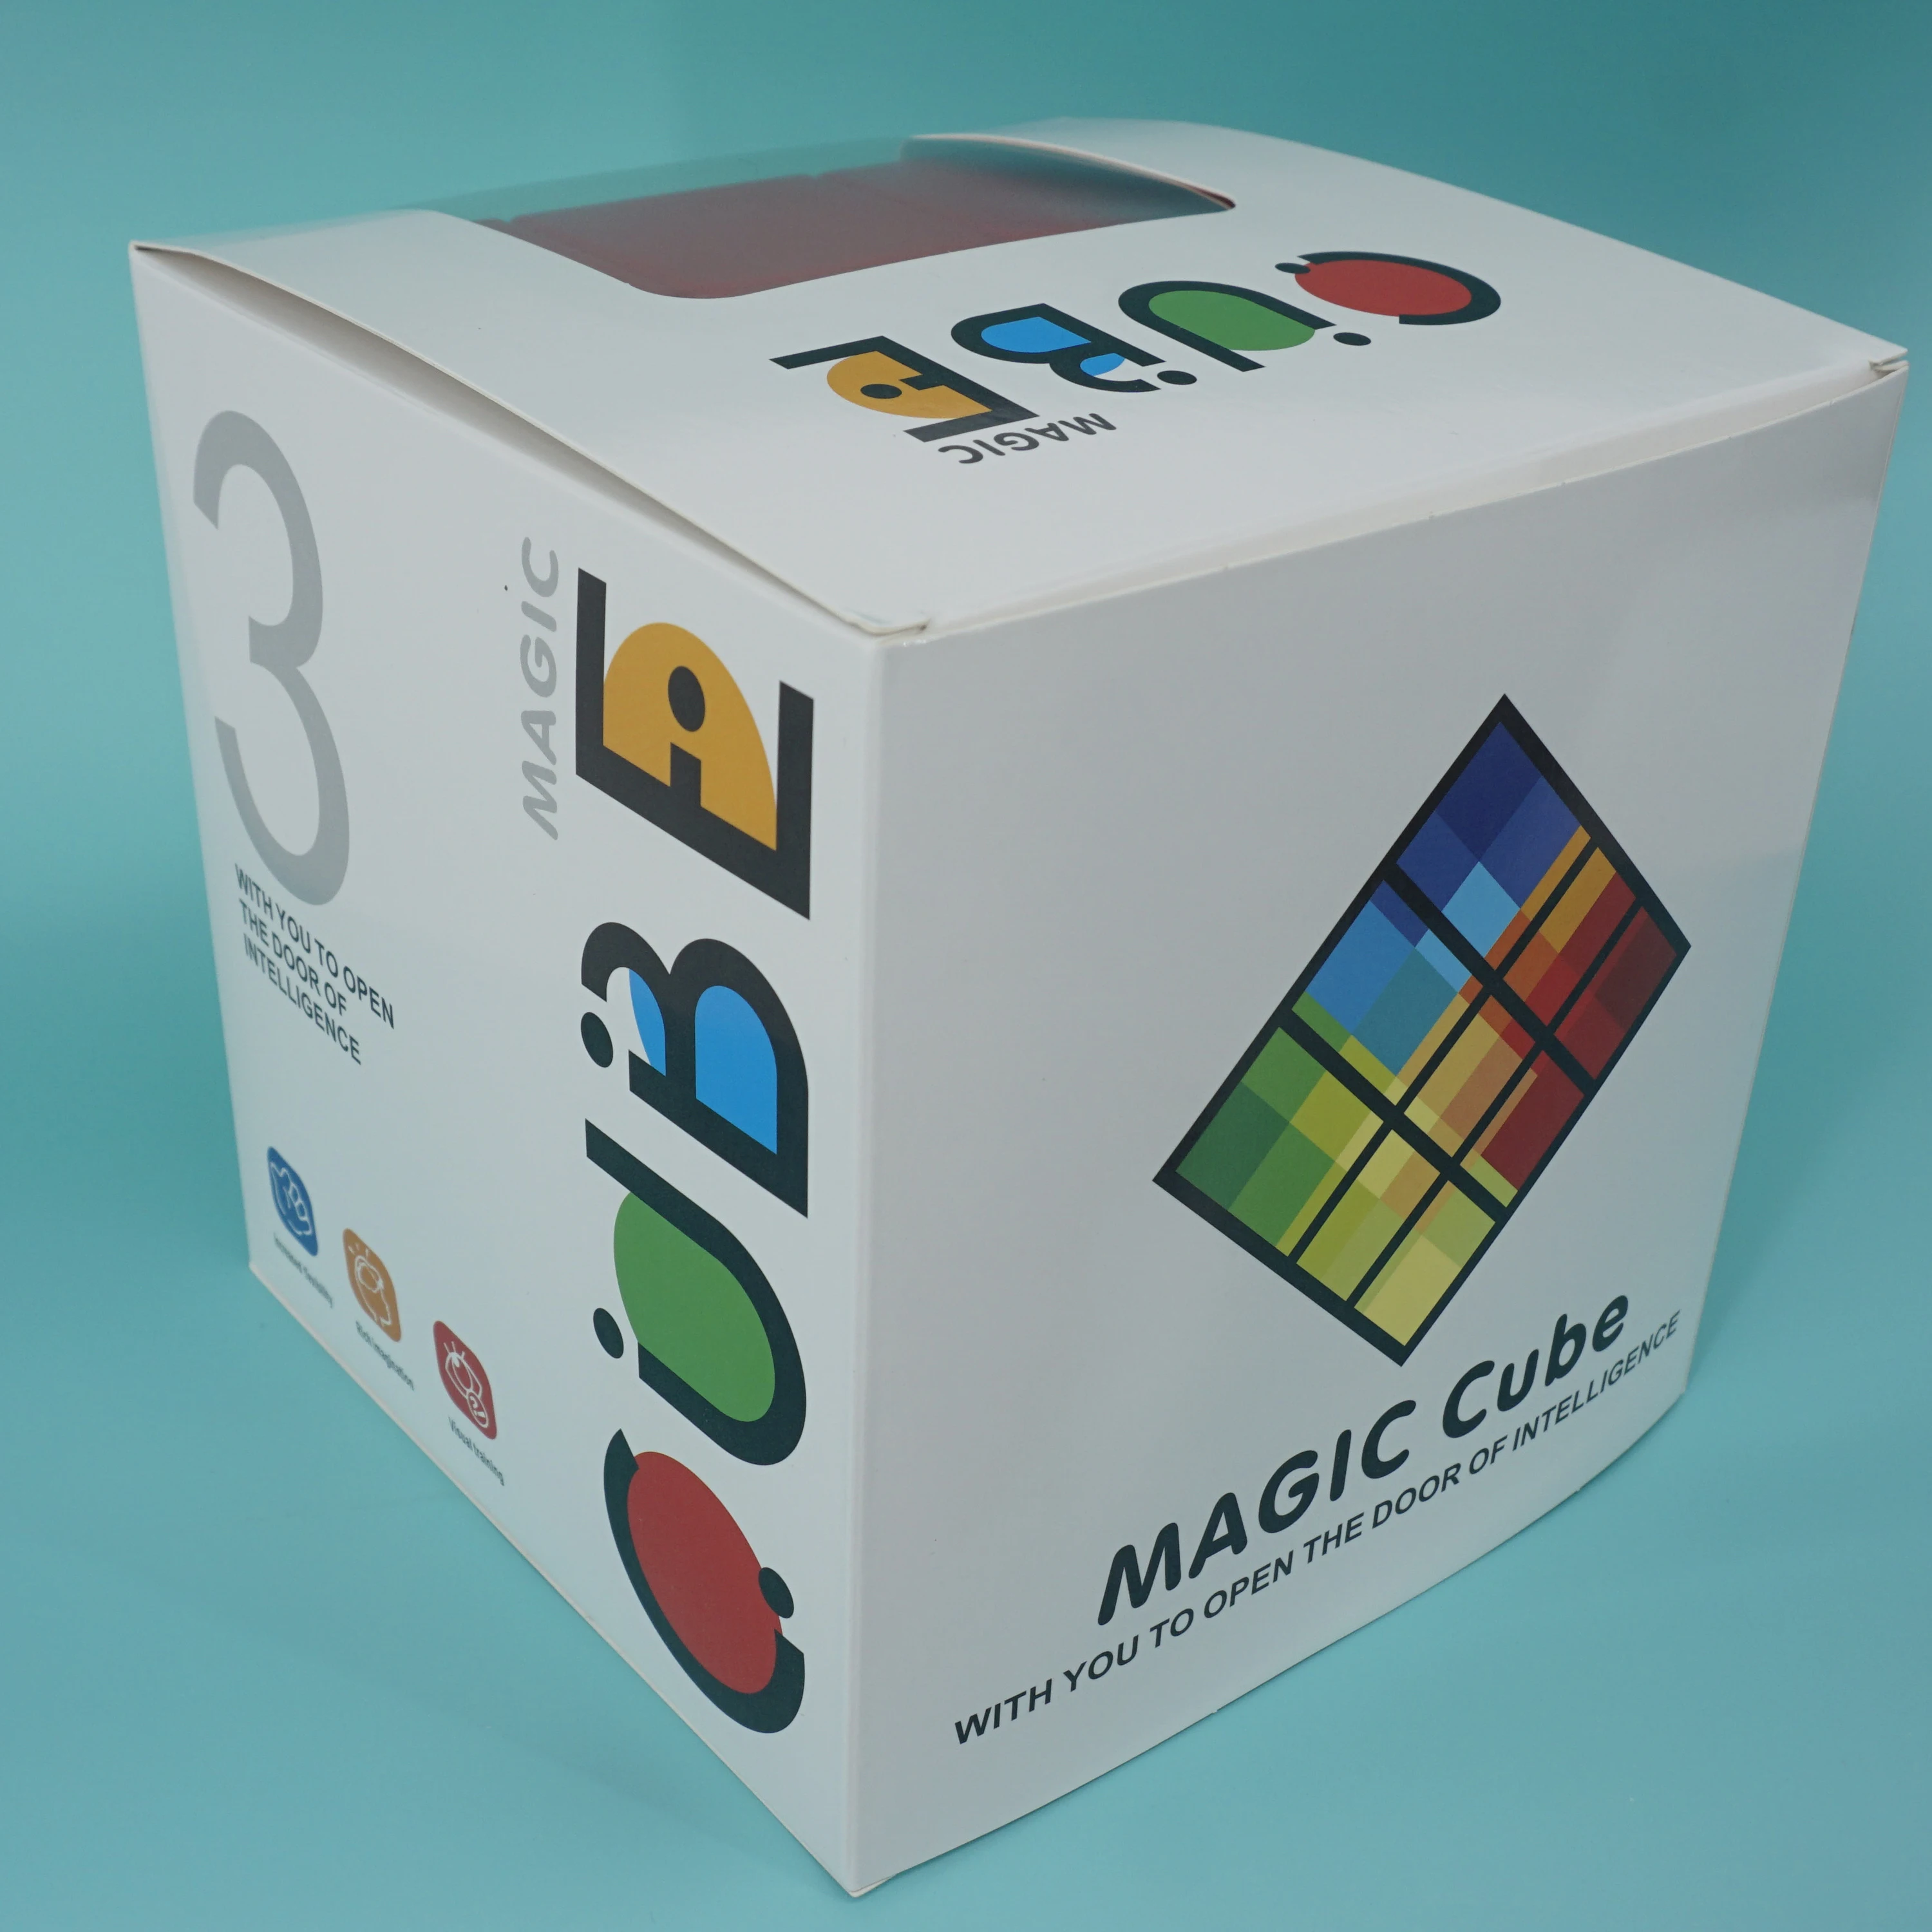 https://ae01.alicdn.com/kf/S4dc5edc0687941d19ec7457ec959fa6eo/Super-Large-cube18cm-Big-Magic-Cubes-3x3x3-Magic-Cubes-Professional-Cube-Speed-CubeToy-For-Children-Gift.jpg